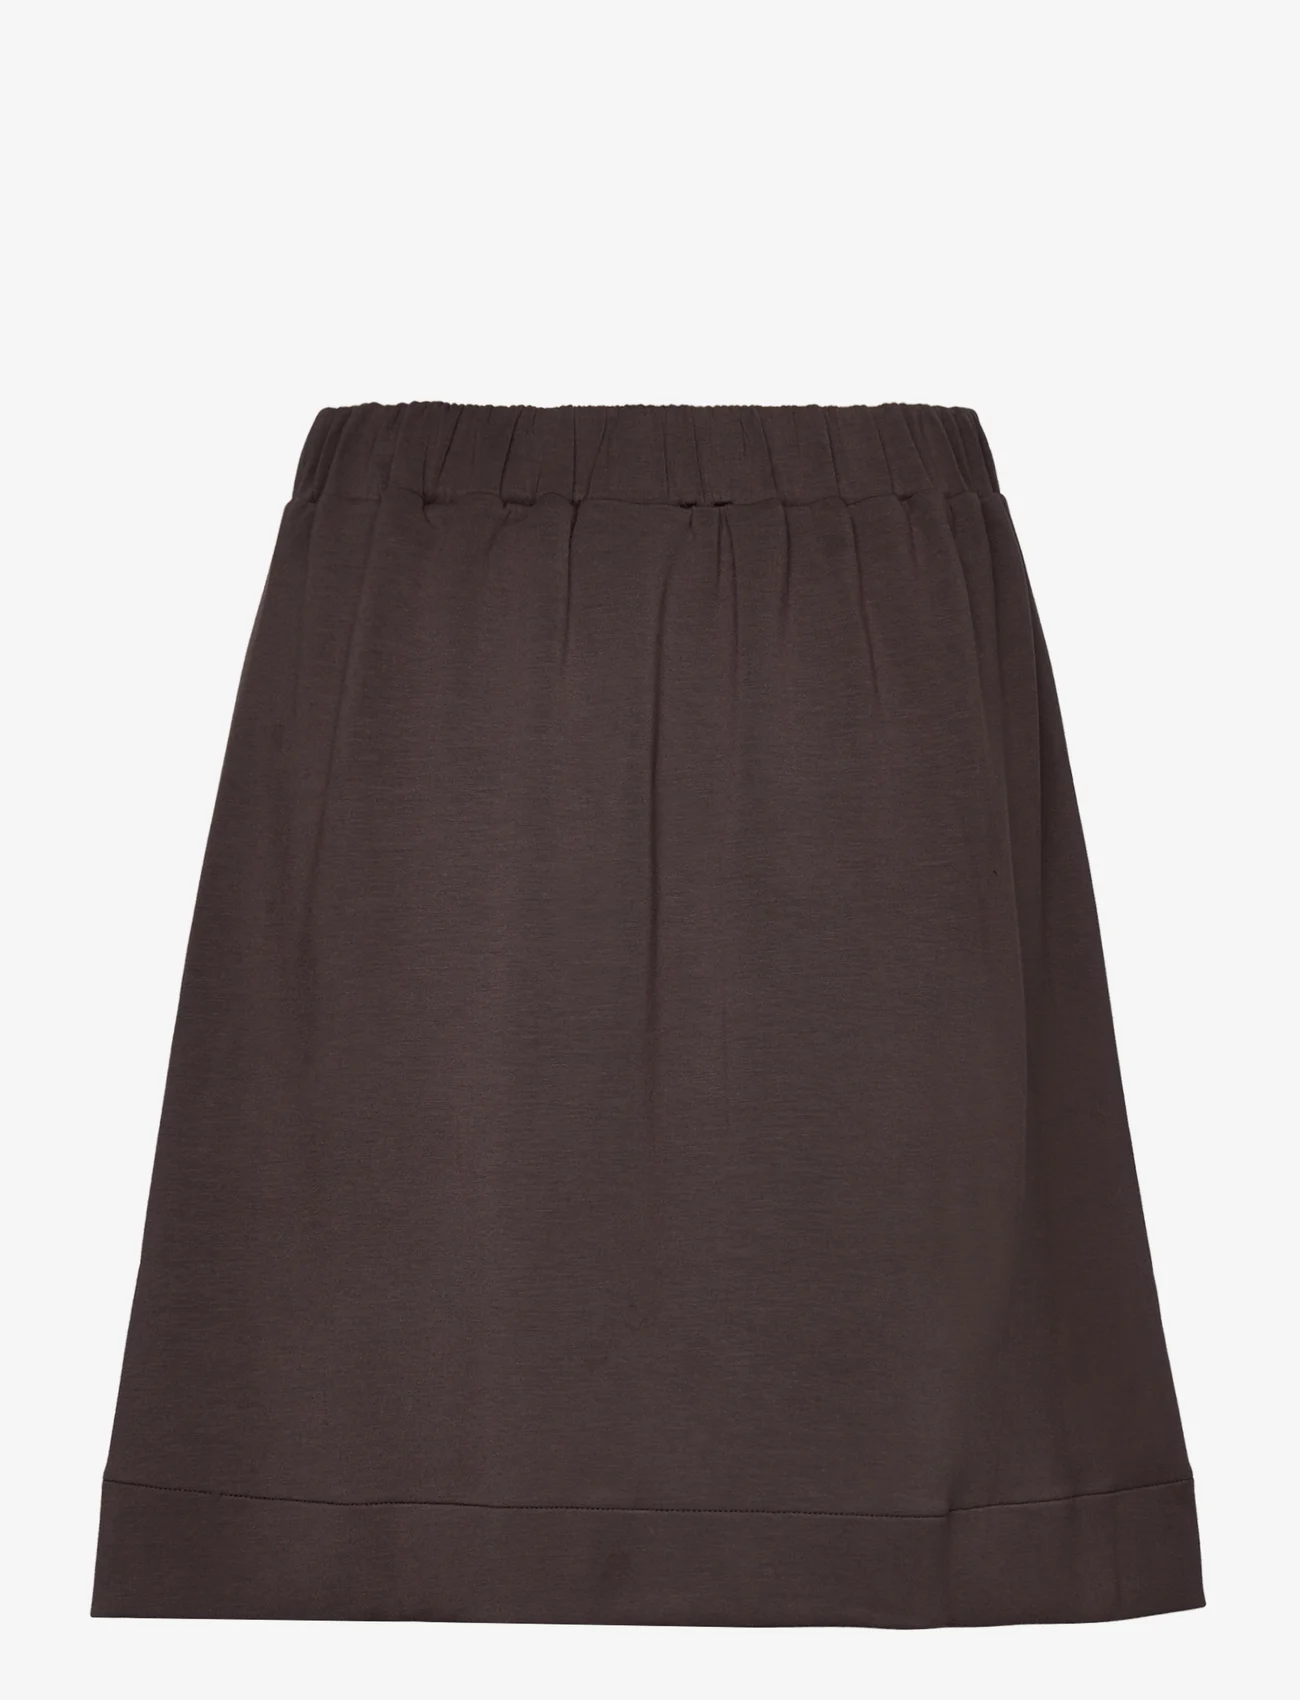 InWear - GincentIW Skirt - short skirts - americano - 1